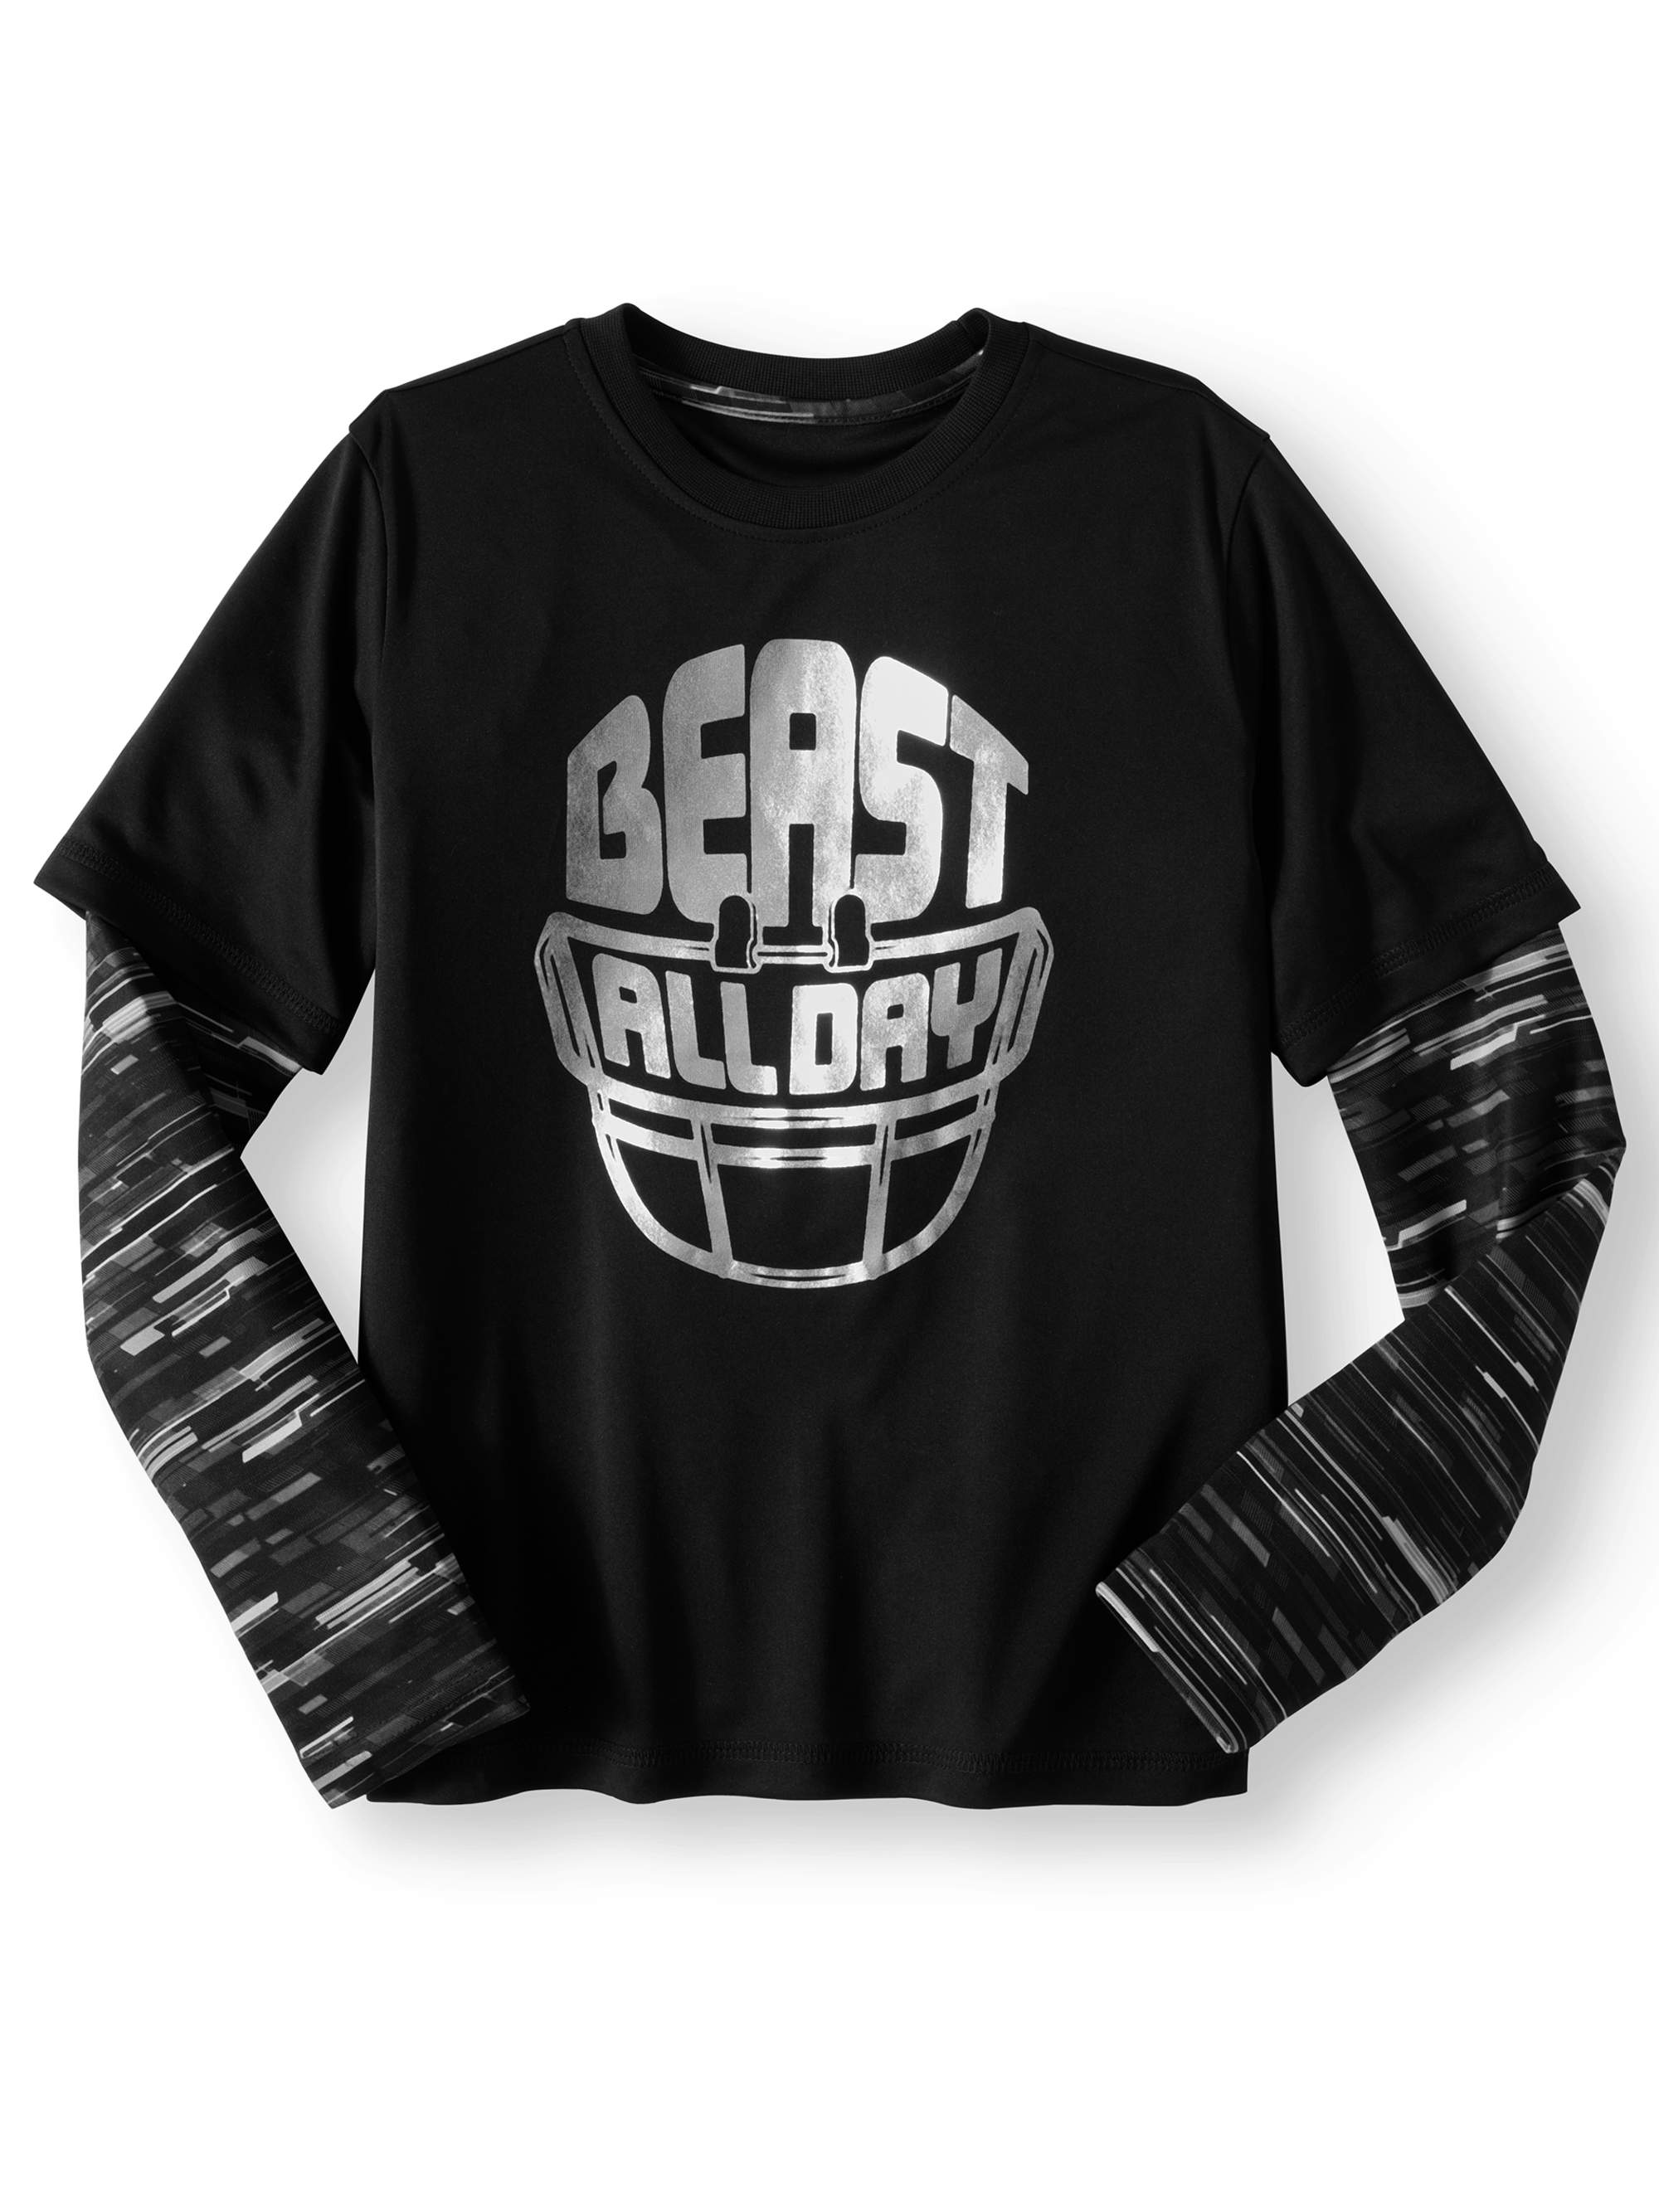 Athletic Works Long Sleeve Hangdown Graphic T-Shirt (Little Boys & Big Boys) - image 1 of 3